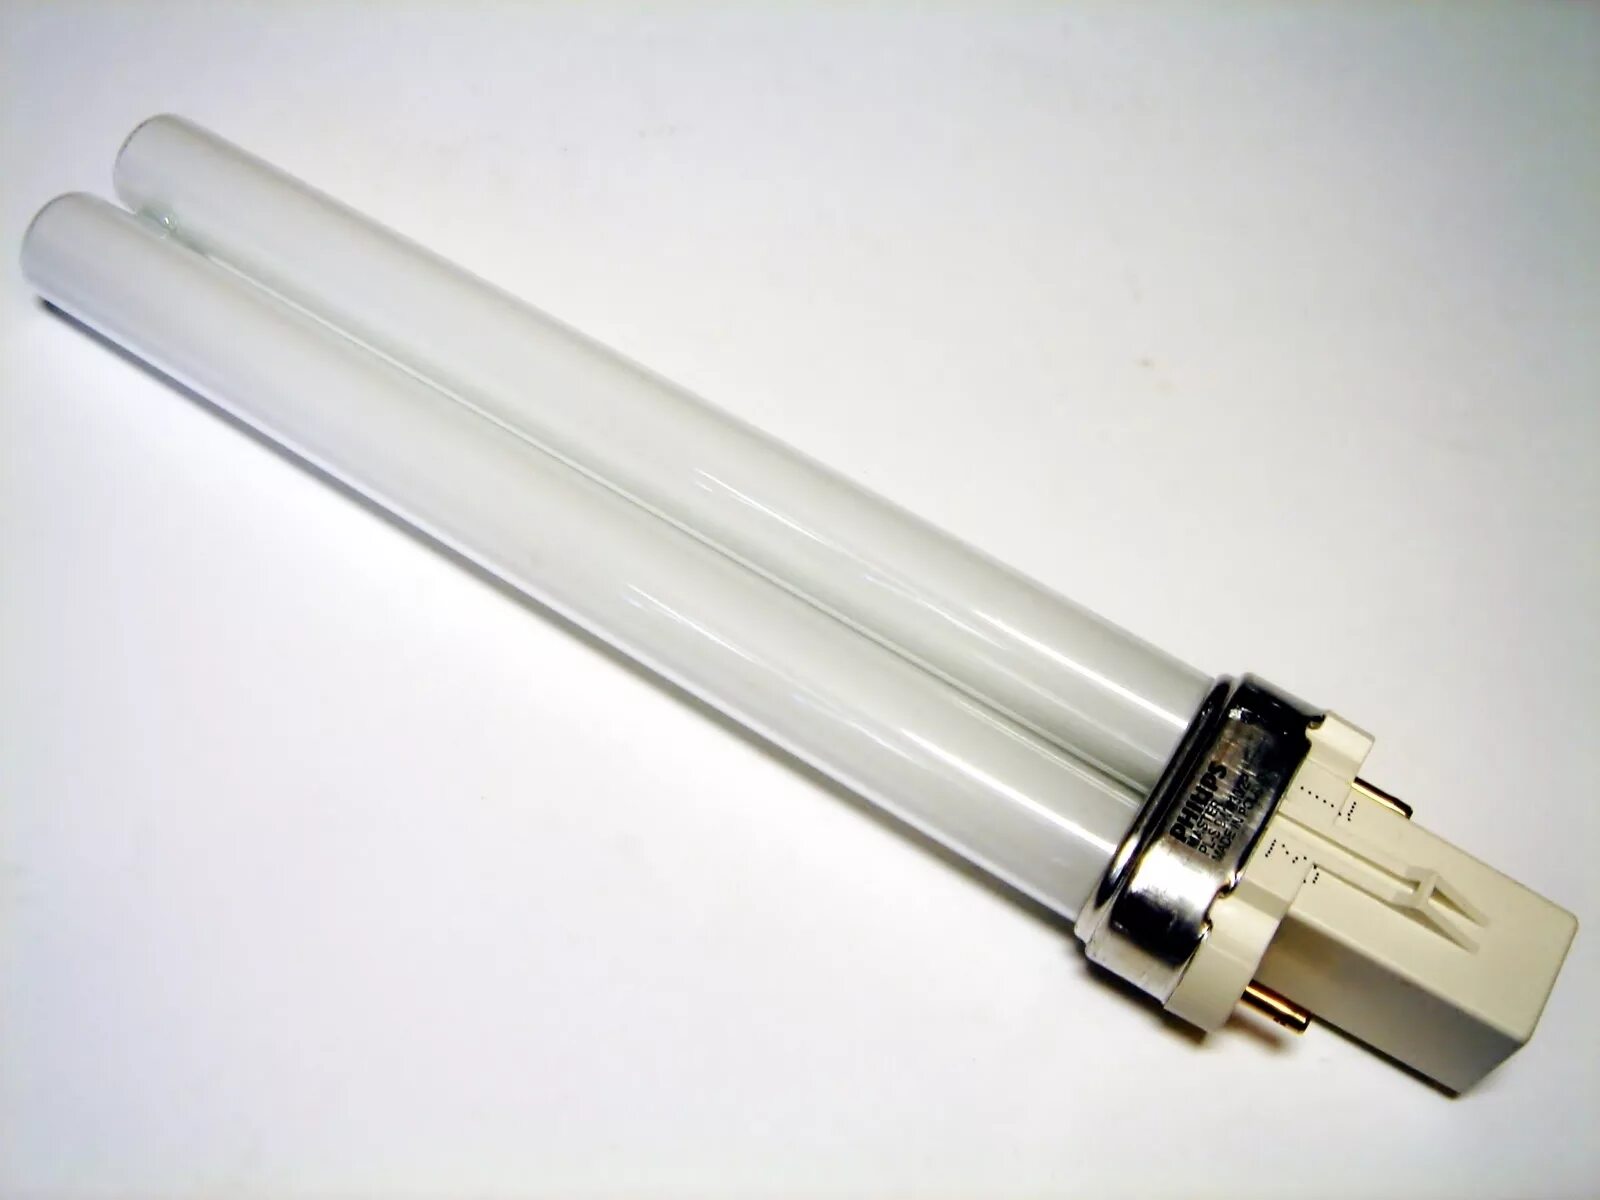 Кемерово купить лампу. Pl 9w g23. Компактная-люминесцентная лампа 9 Вт, Master pl-s, Philips, 9w/840/g23, 2-Pin, 260871. Лампа цоколь g23. Филипс лампа pl-s 9w.